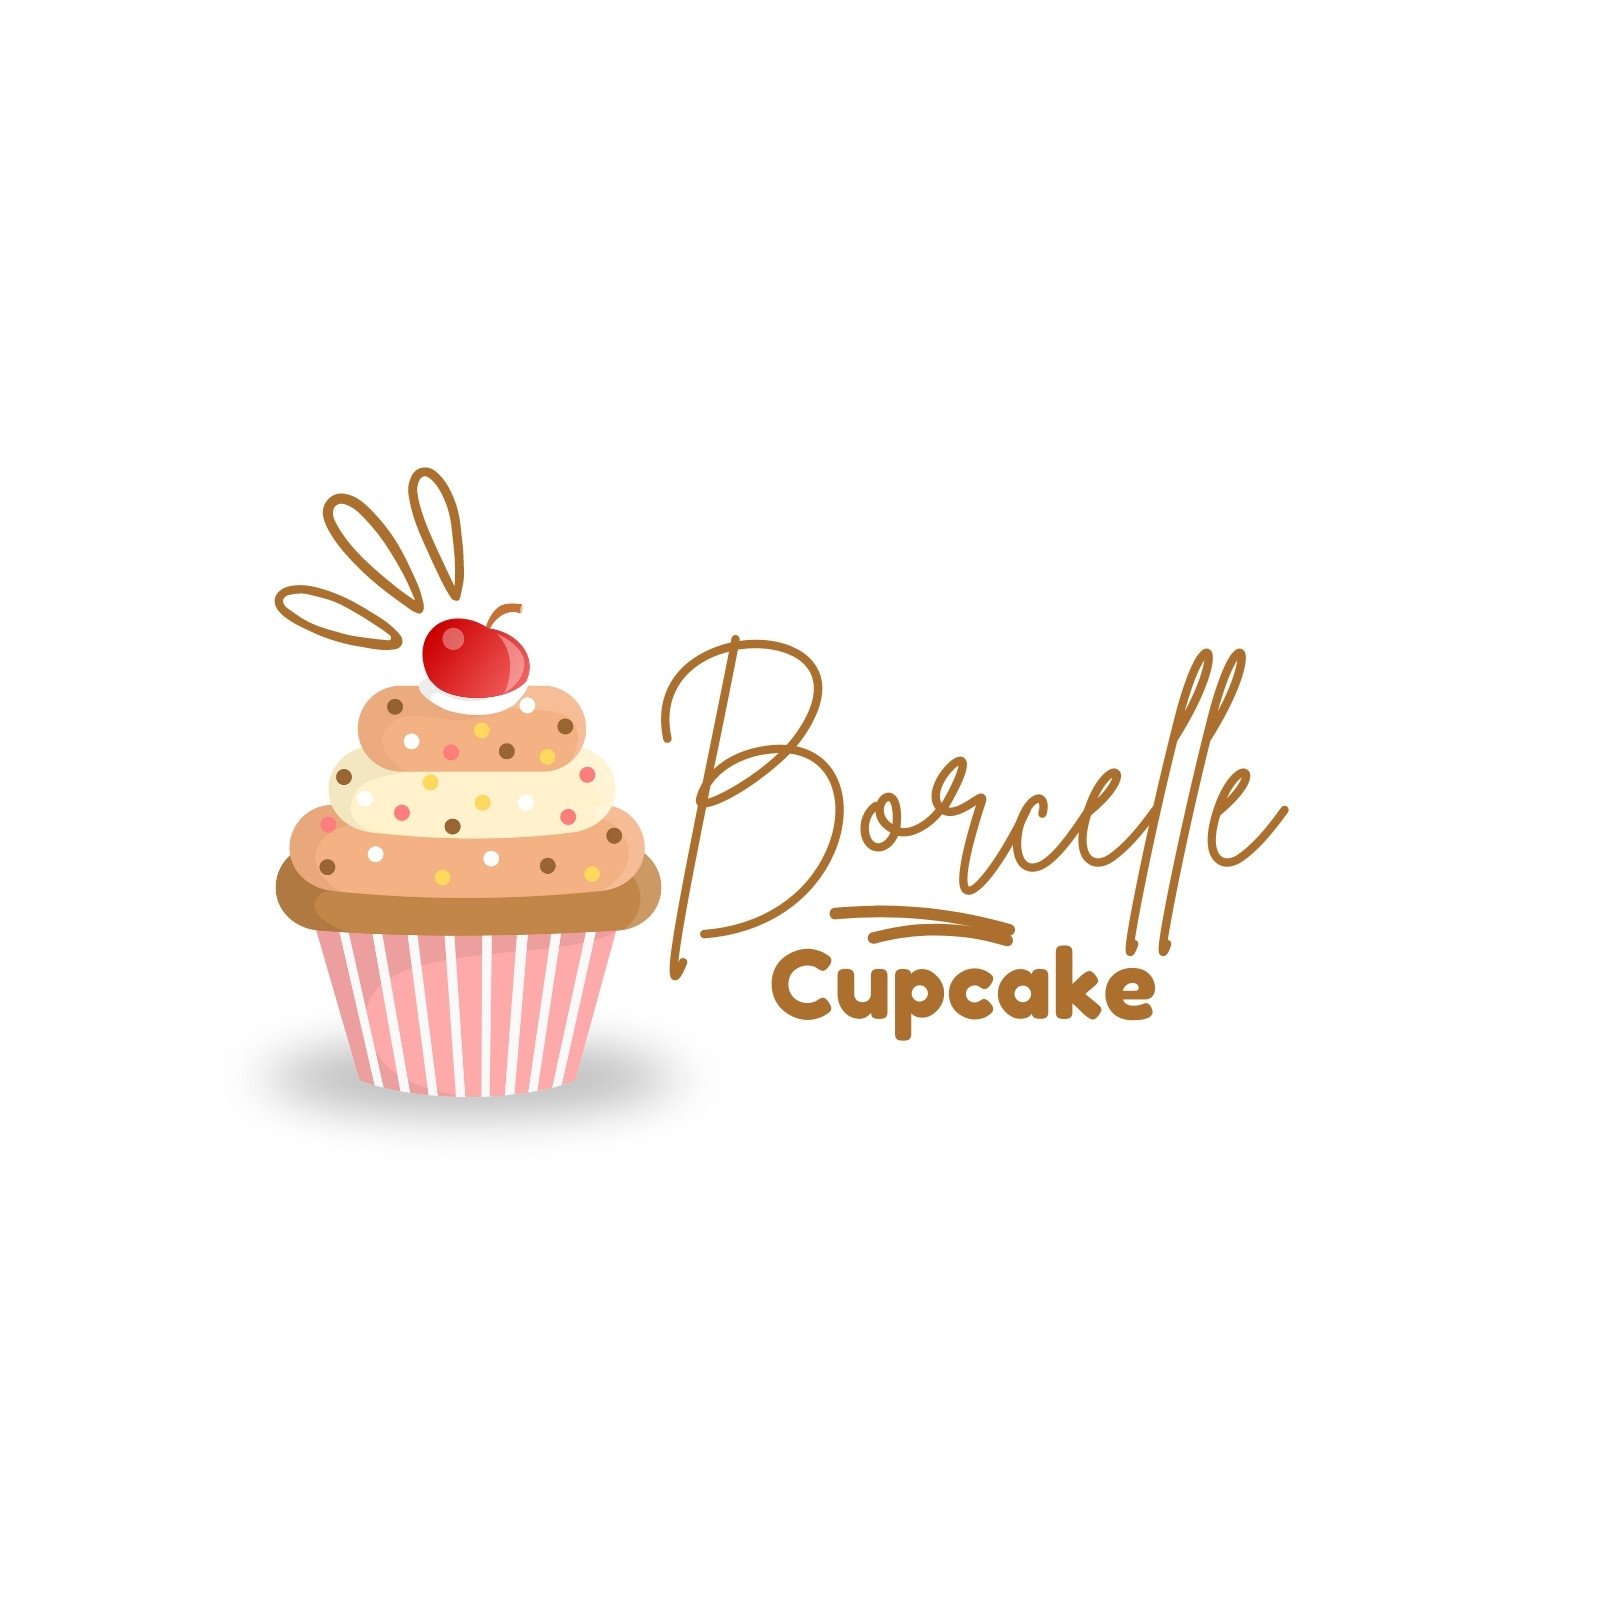 Customize 998+ Cake Logo Templates Online - Canva